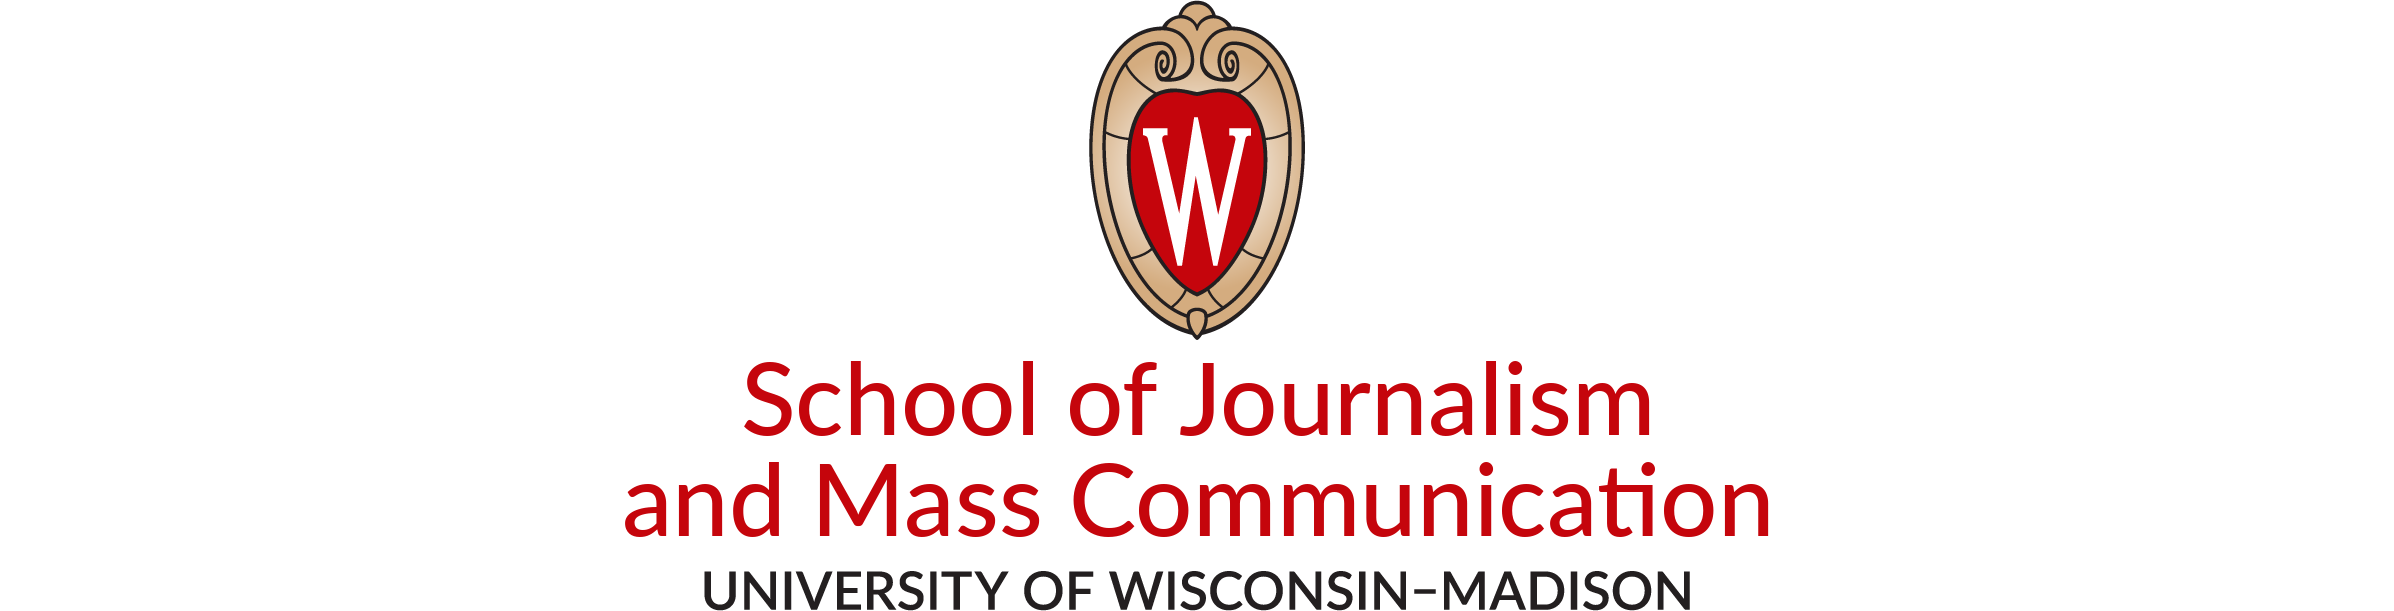 University of Wisconsin-Madison School of Journalism and Mass Communication